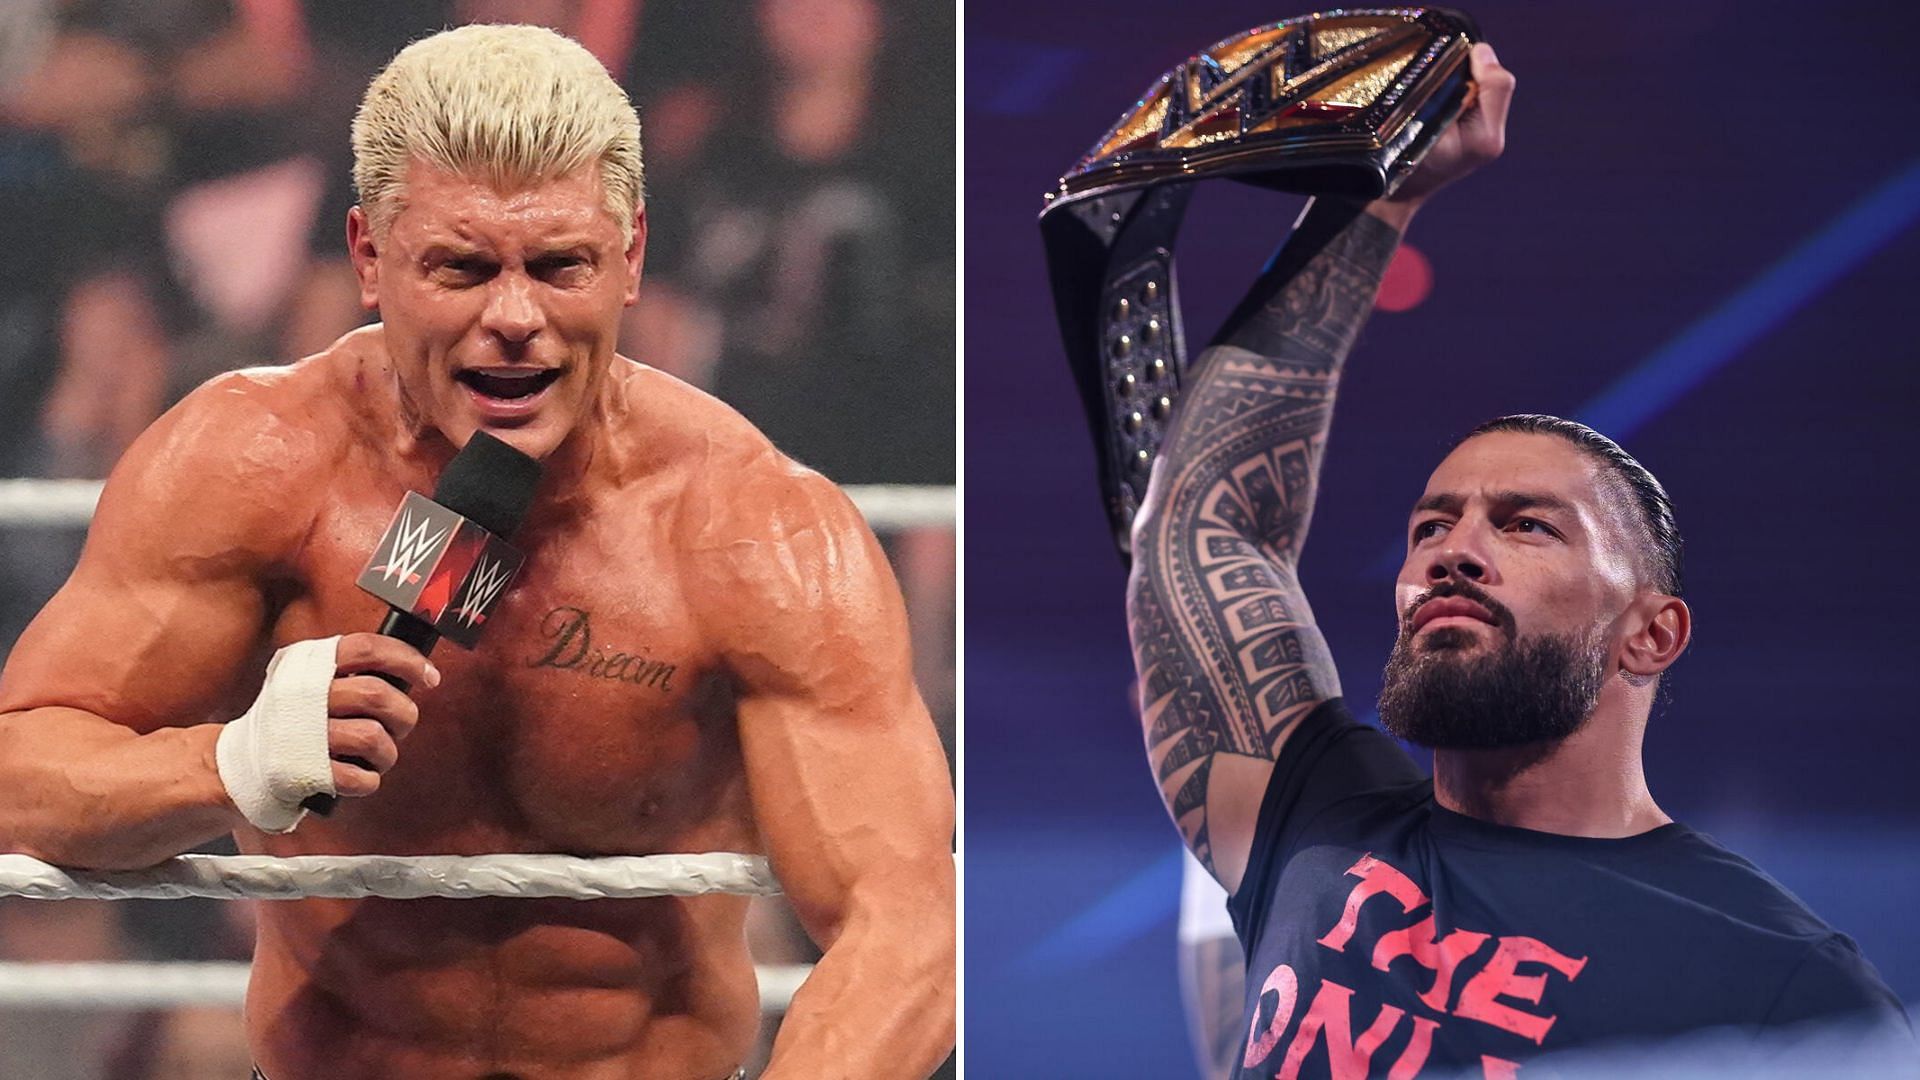 Cody Rhodes will face Roman Reigns again at WrestleMania